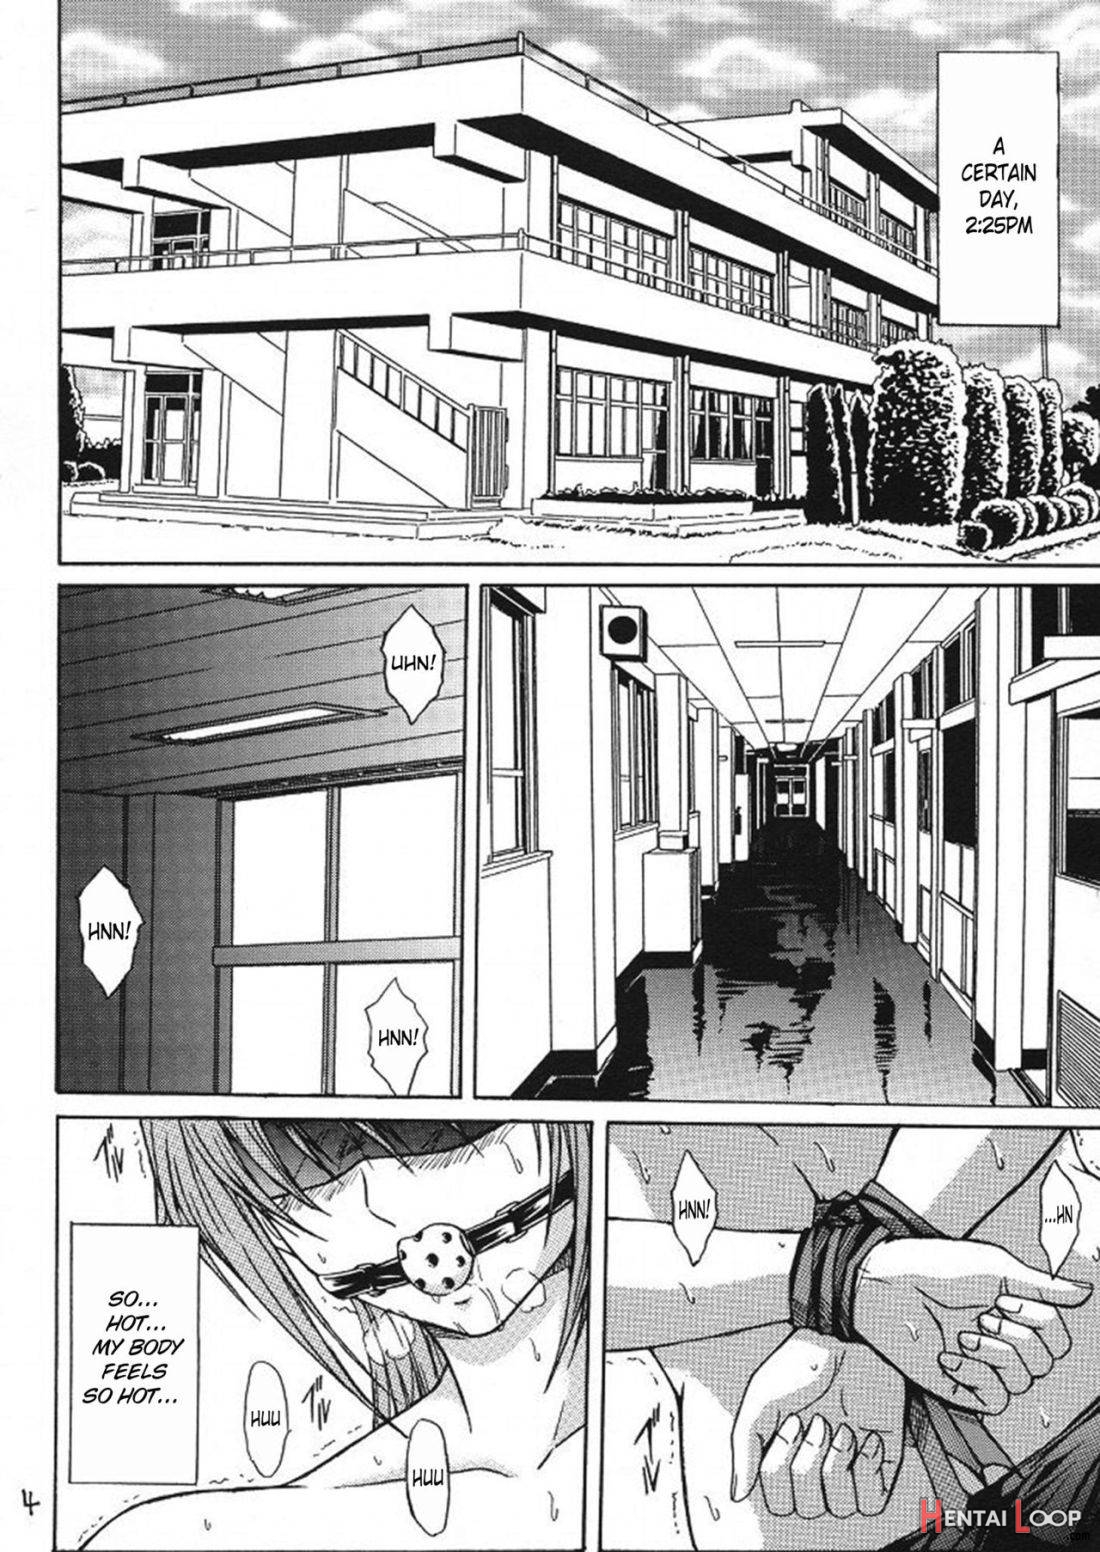 Ryoujoku Rensa 01 page 3